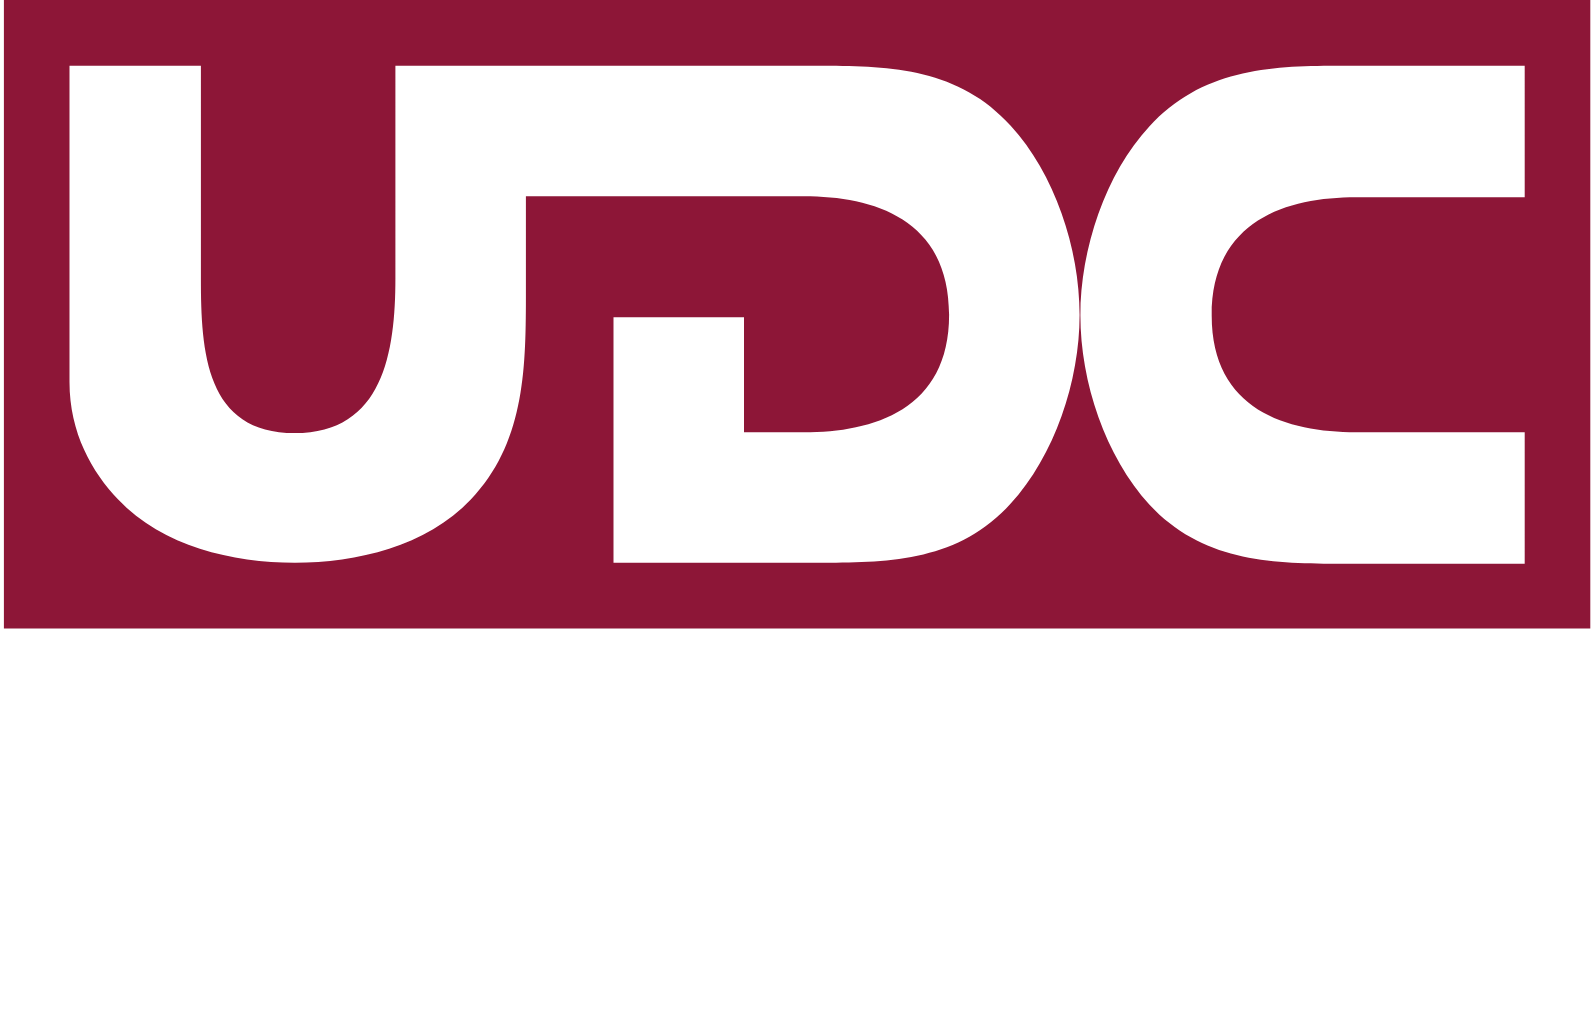 United Development Company logo large for dark backgrounds (transparent PNG)